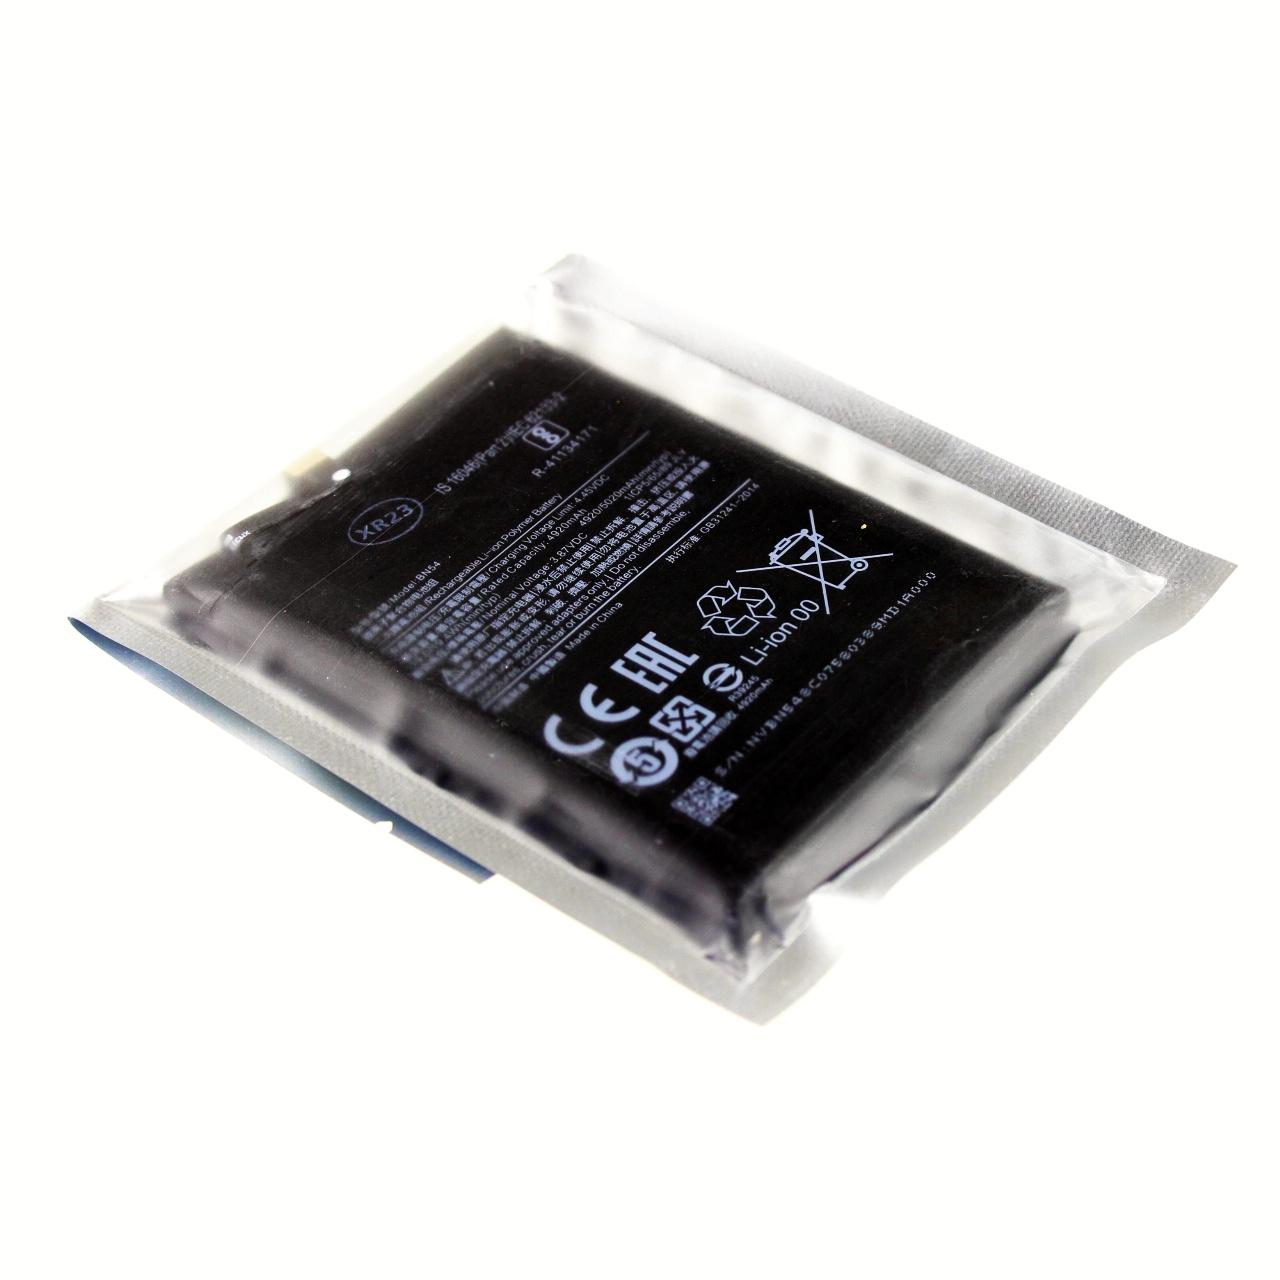 Battery BN54 Xiaomi Redmi 9 / Note 9 5020 mAh